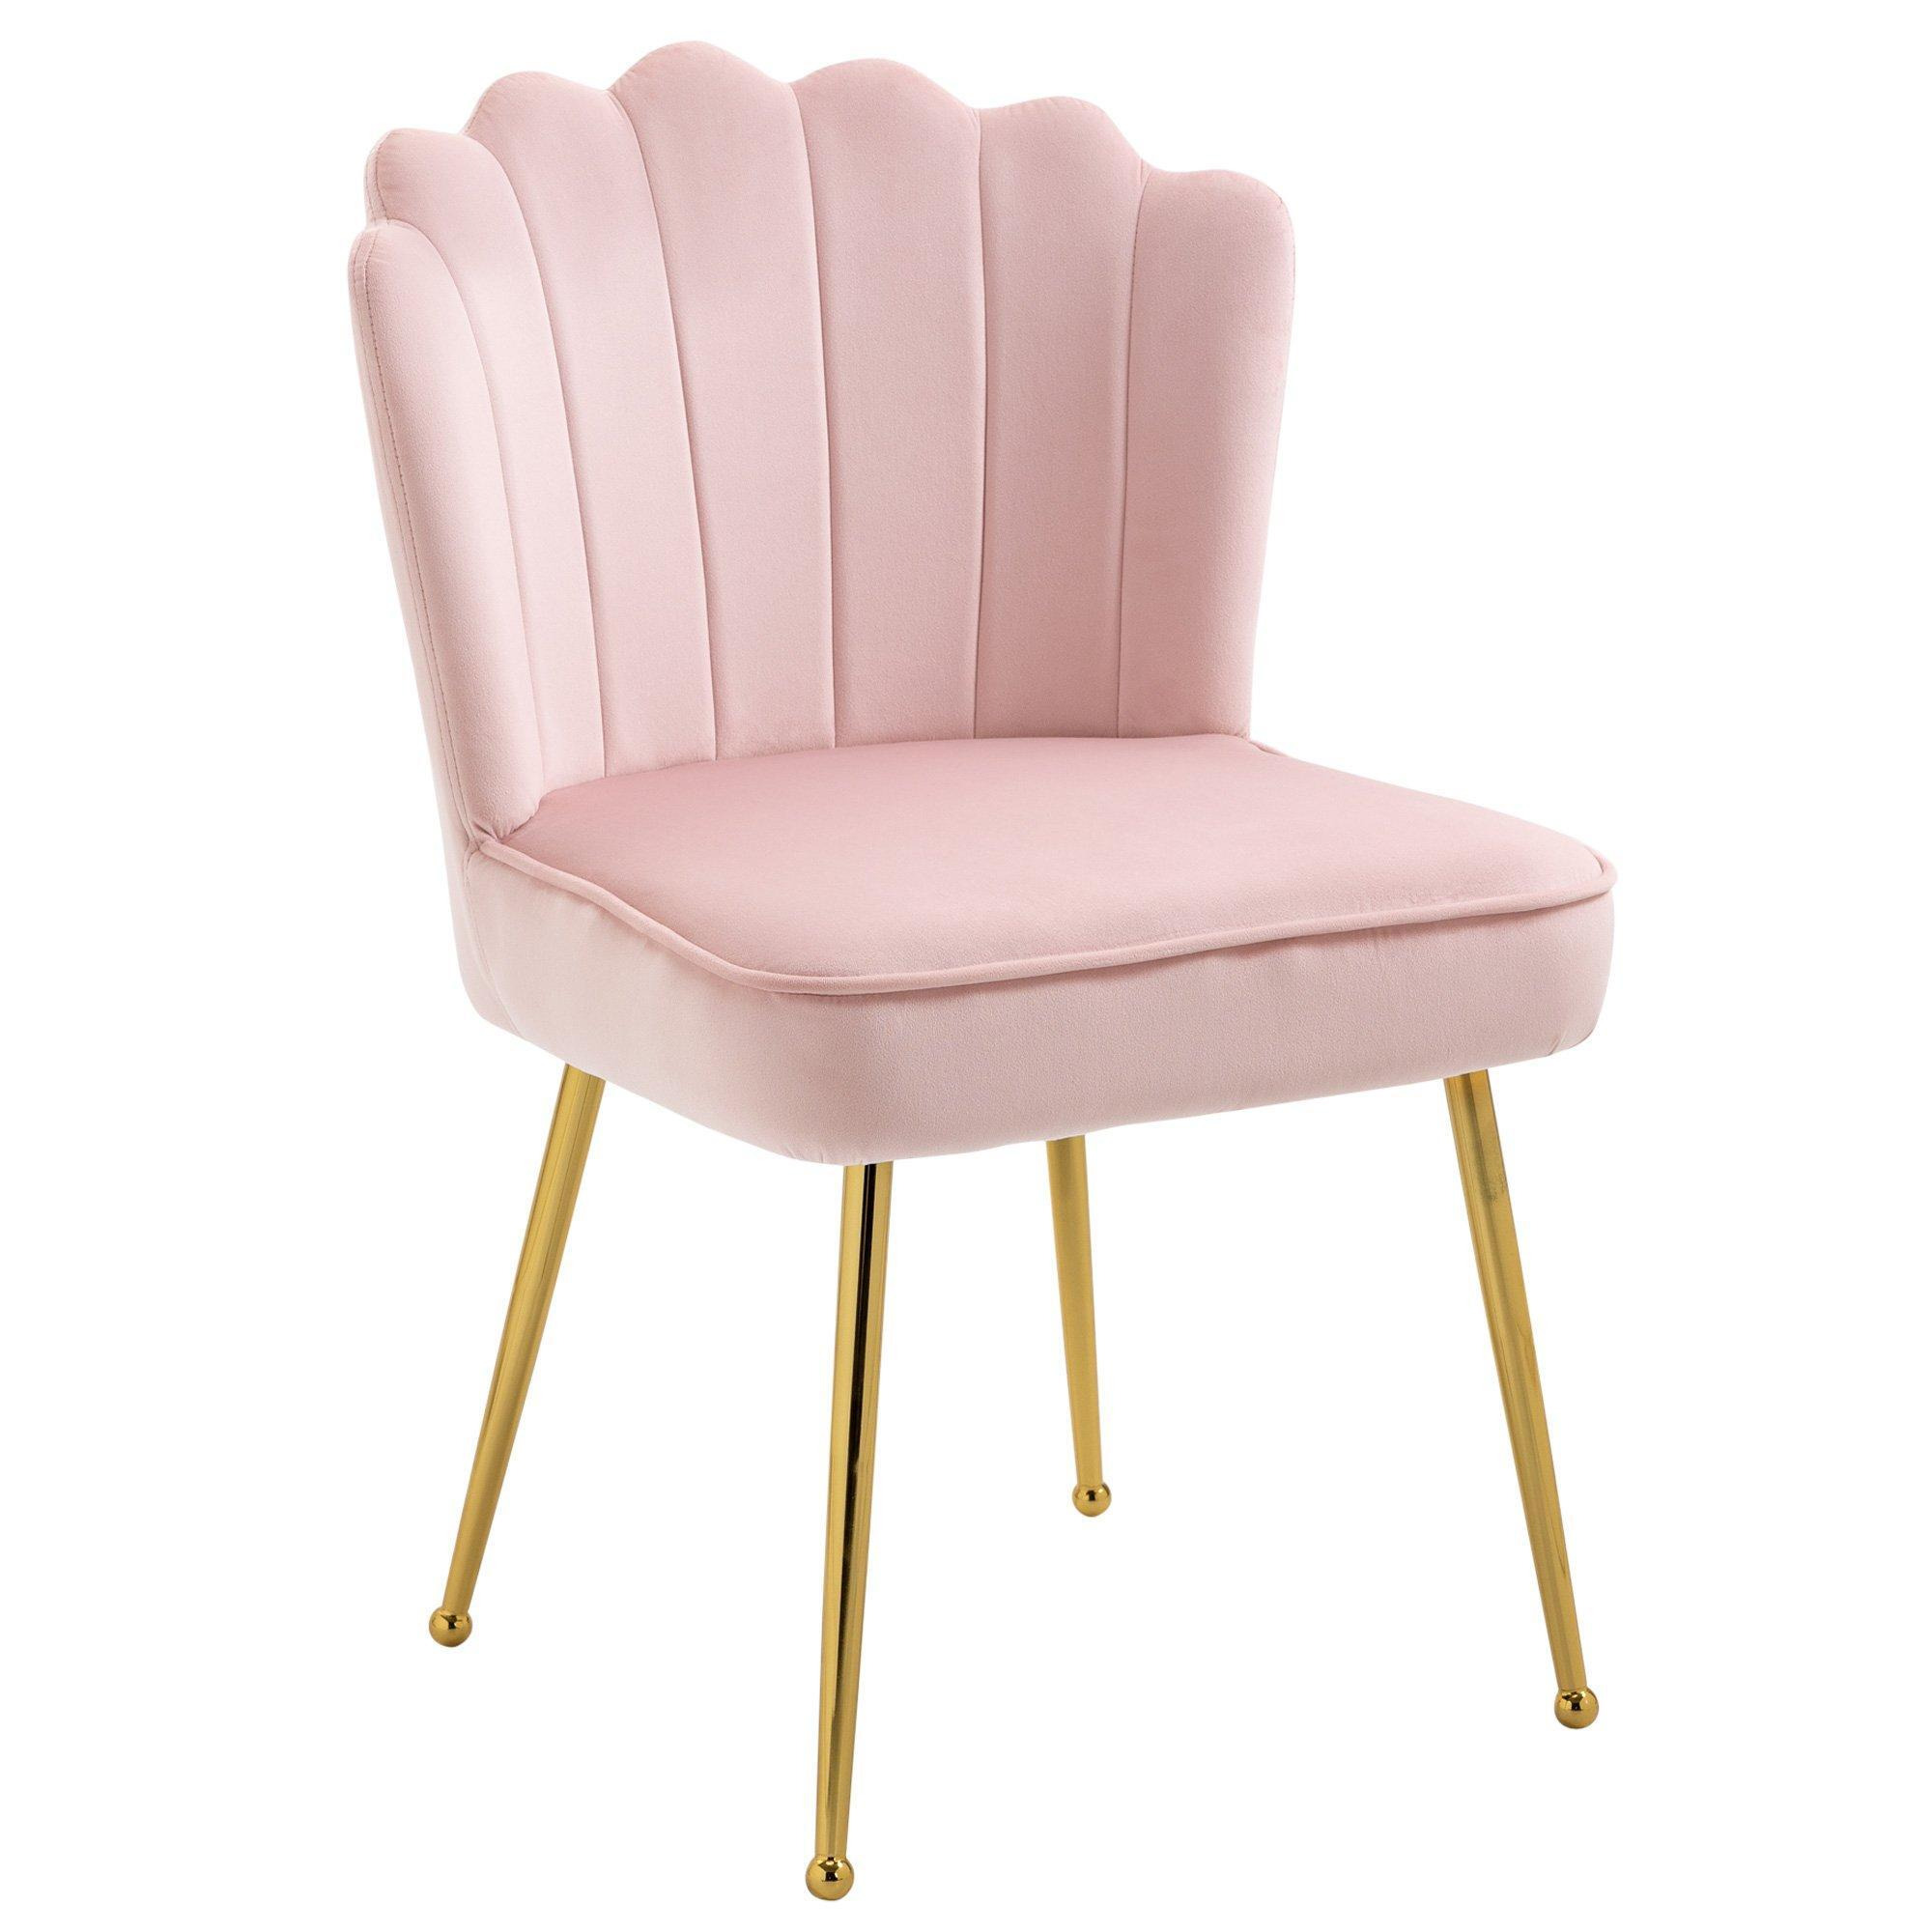 Velvet-Feel Shell Luxe Accent Chair Home Bedroom Lounge - image 1